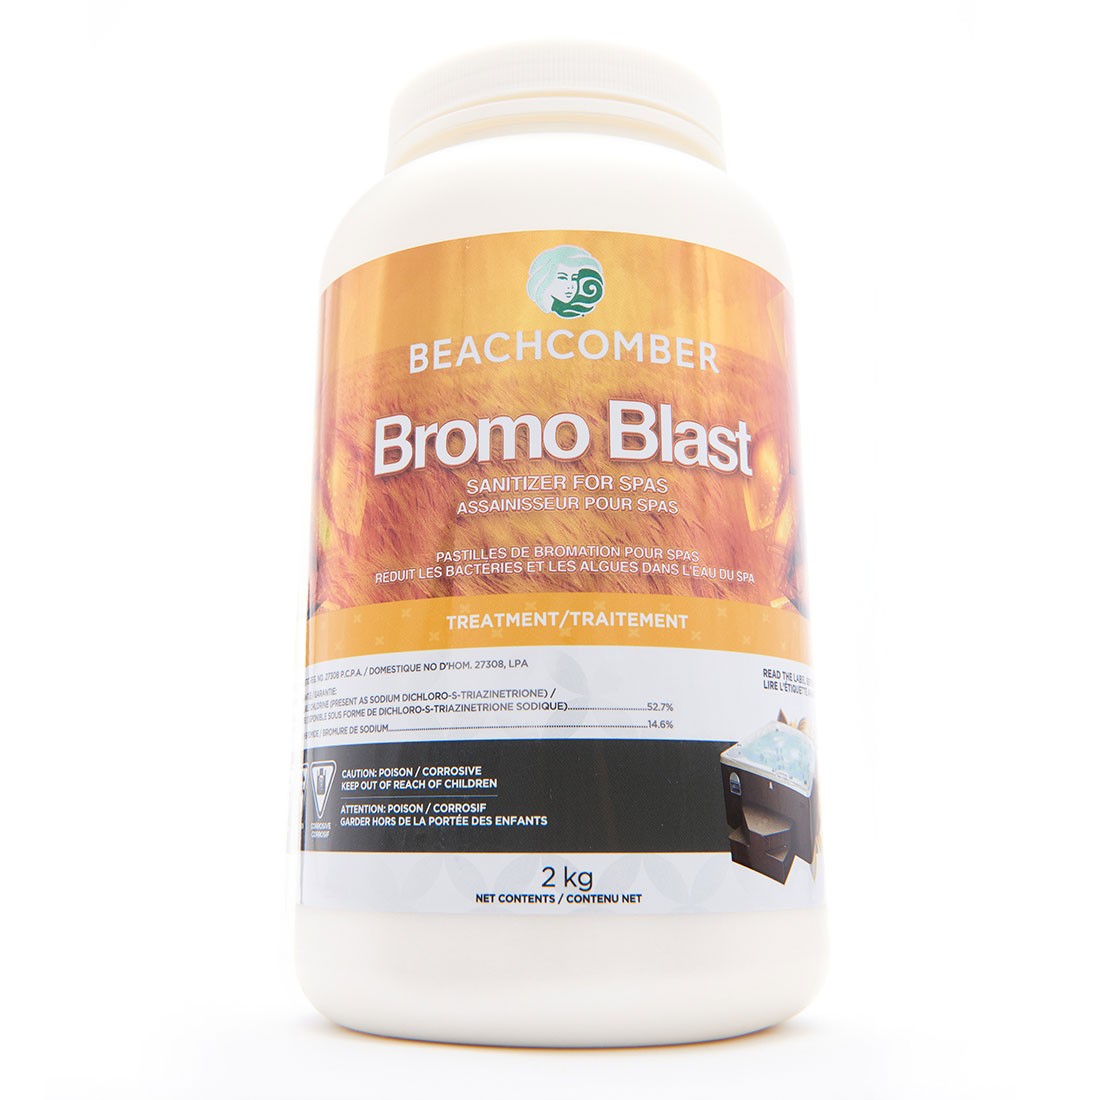 Beachcomber Bromo Blast Bromine Sanitizer